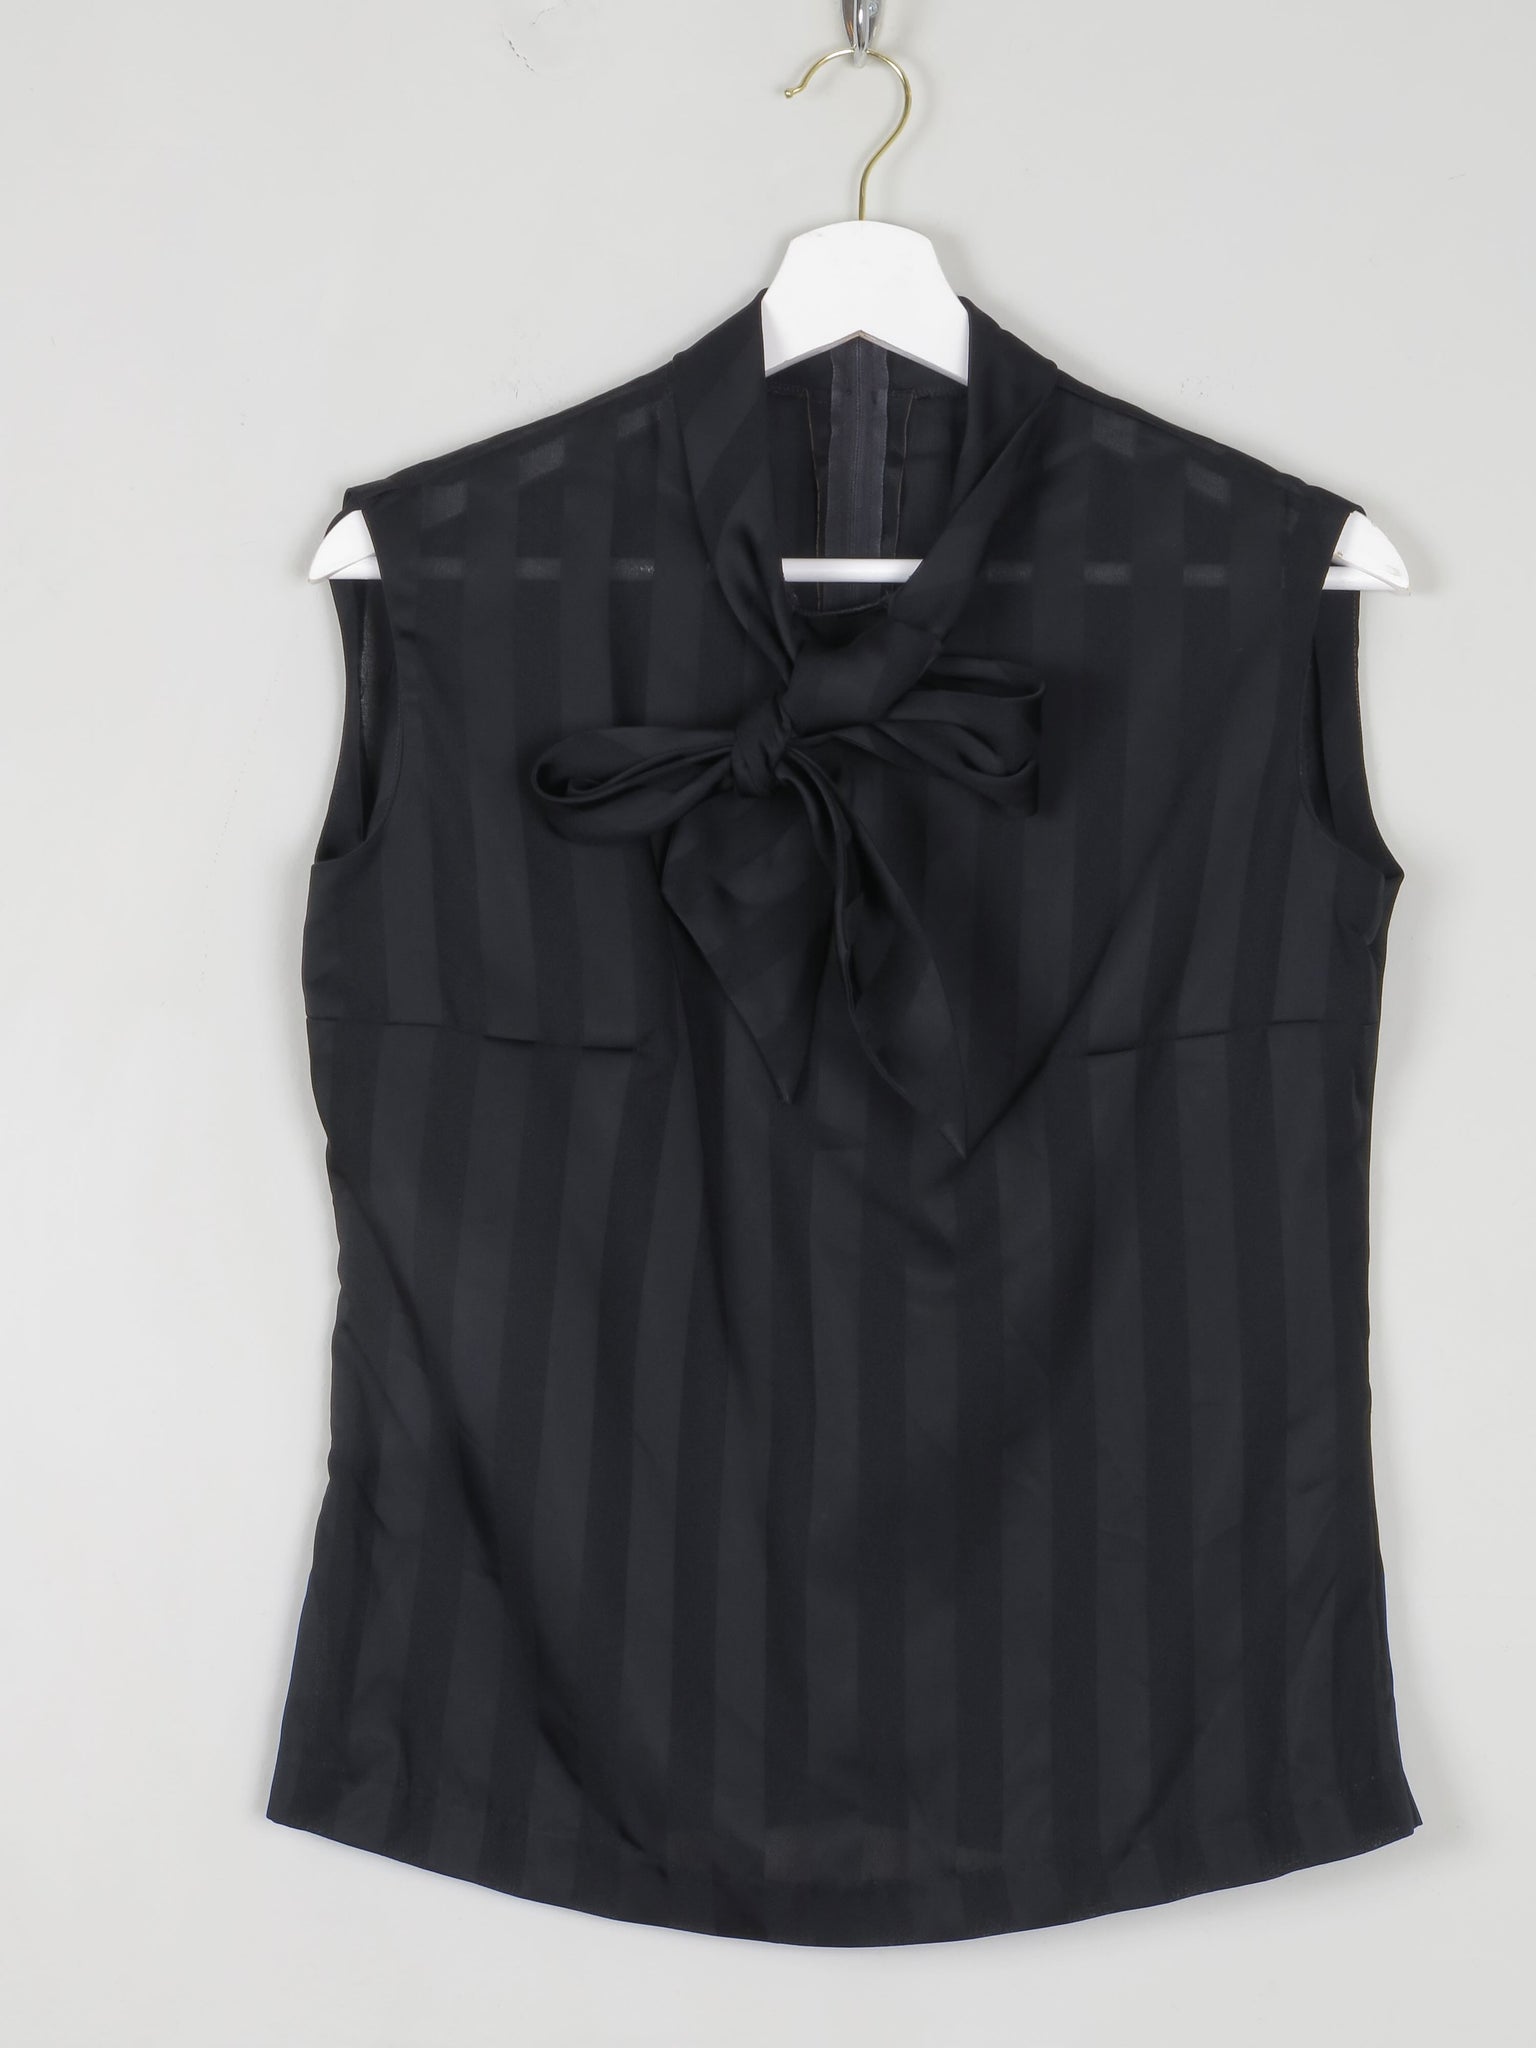 Women's Vintage Black Blouse With Tie Neck S